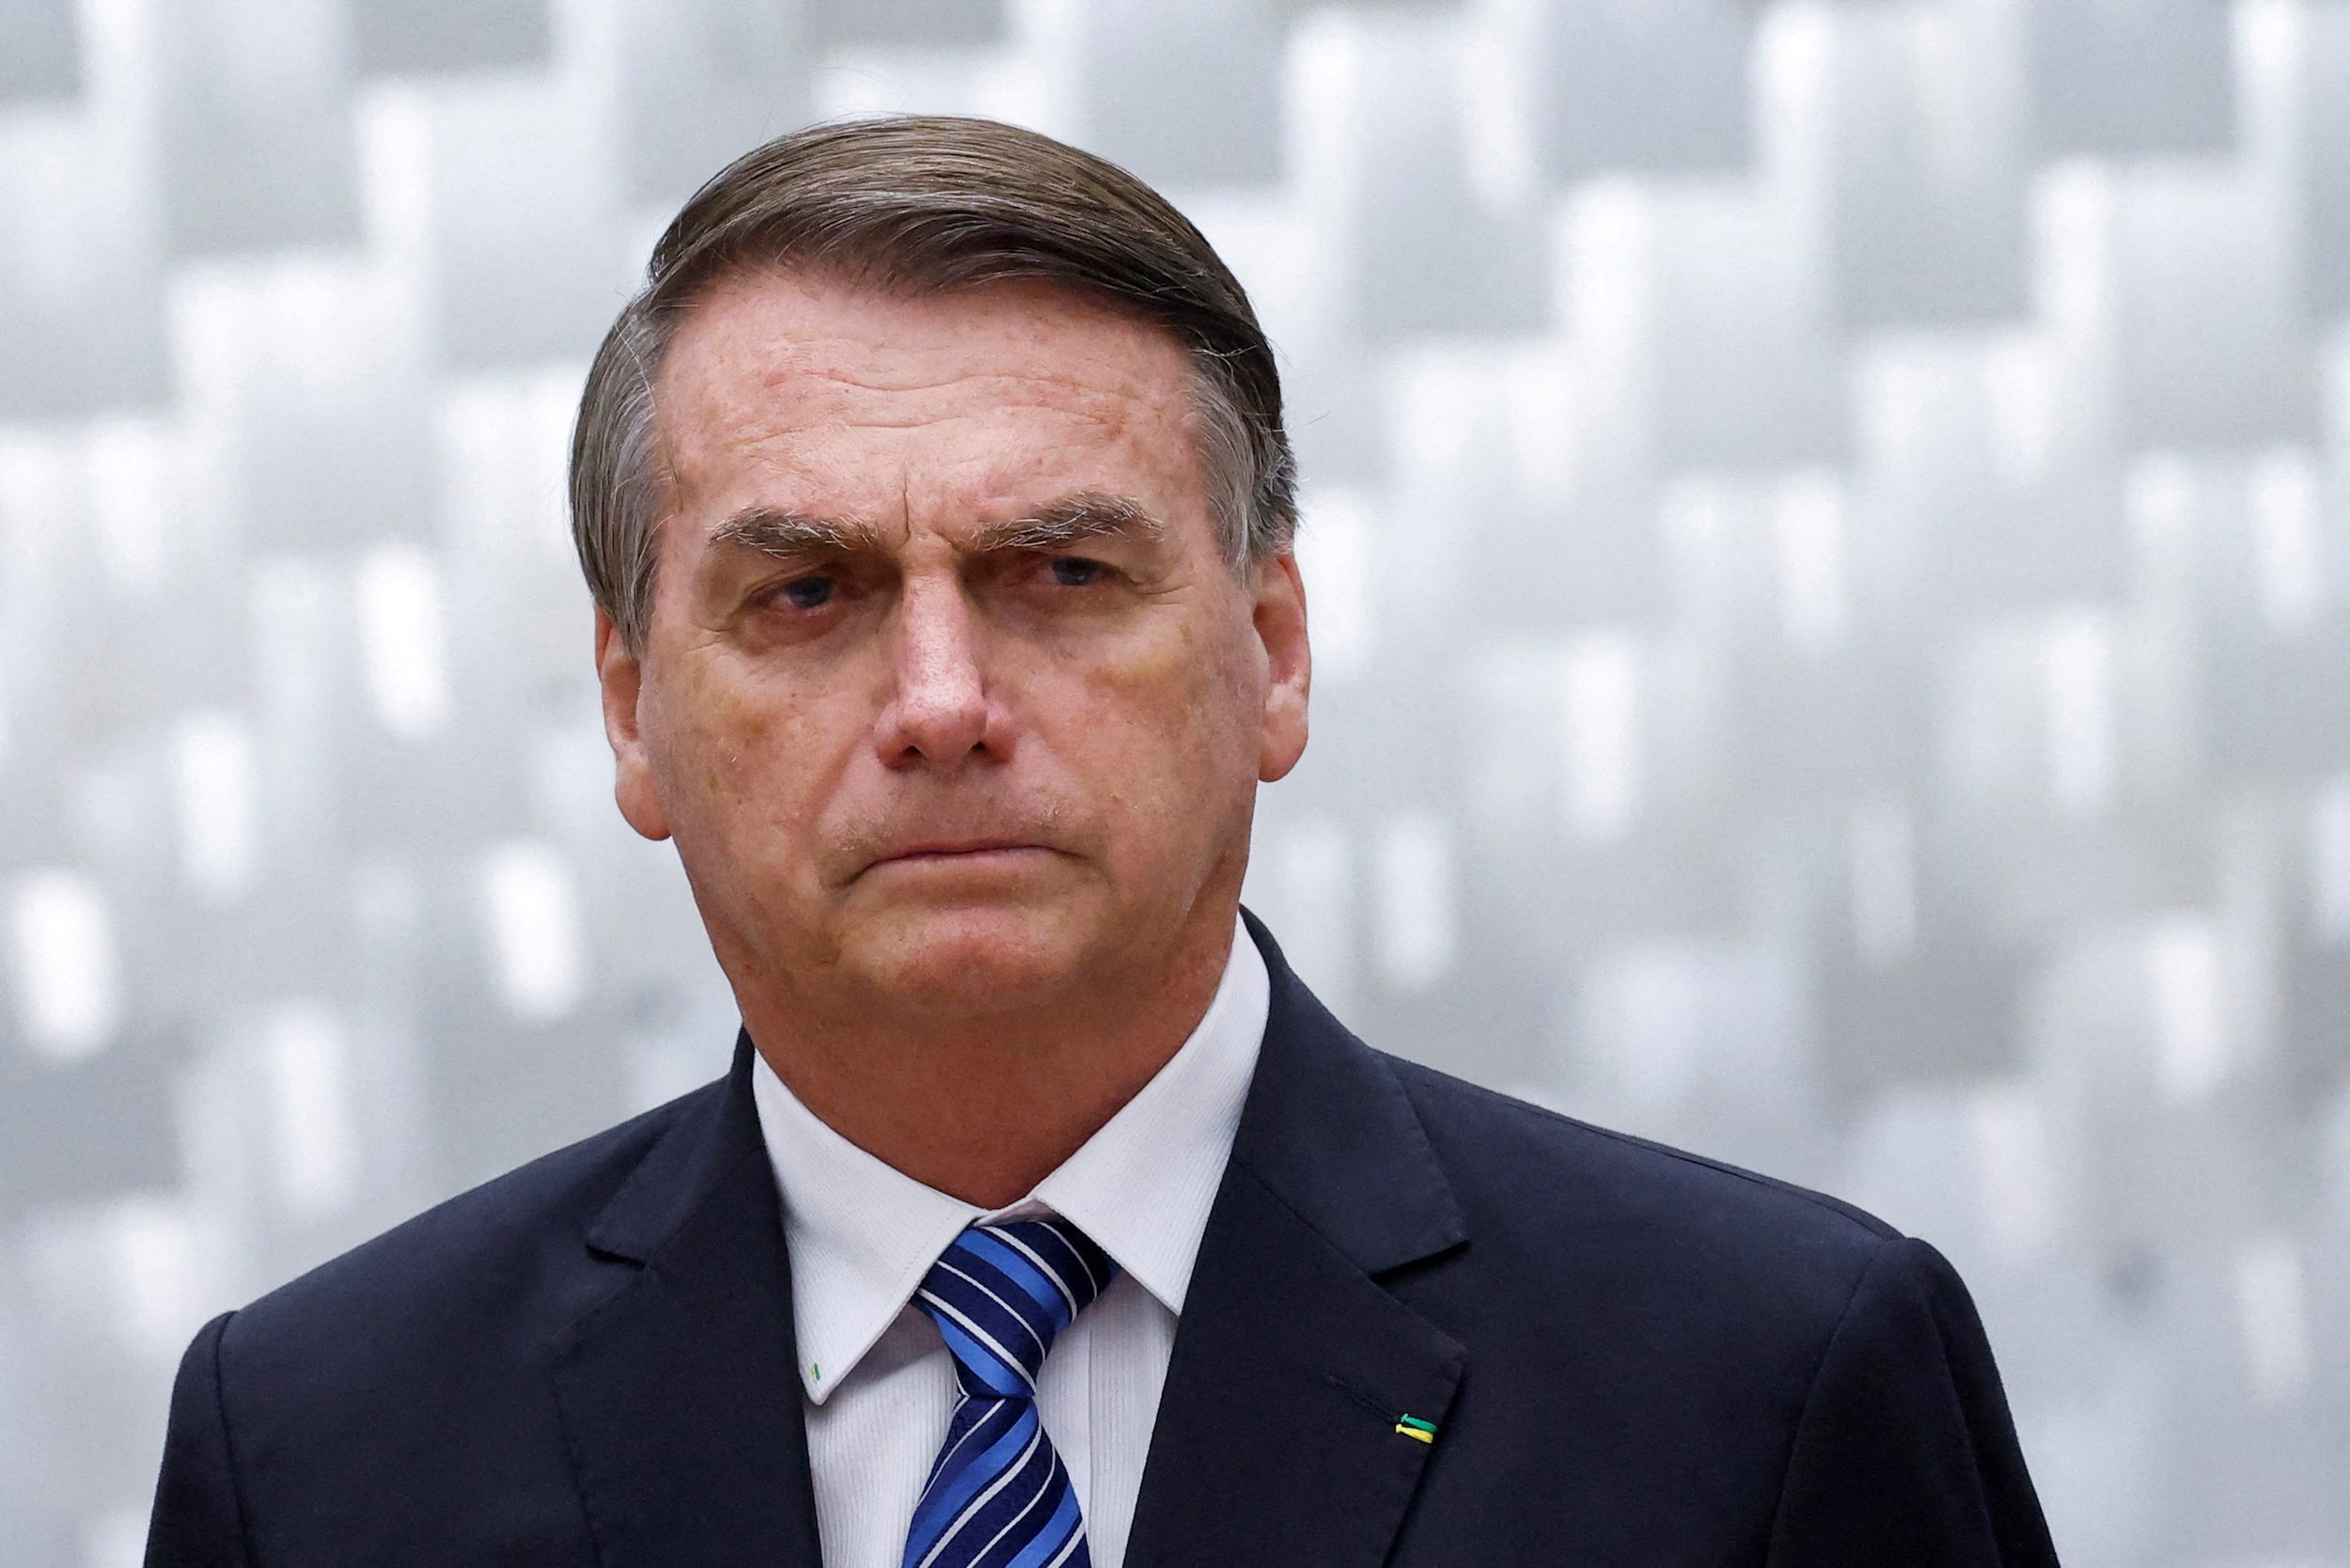 ‘It hurts my soul’: Brazil’s Bolsonaro ends post-election silence